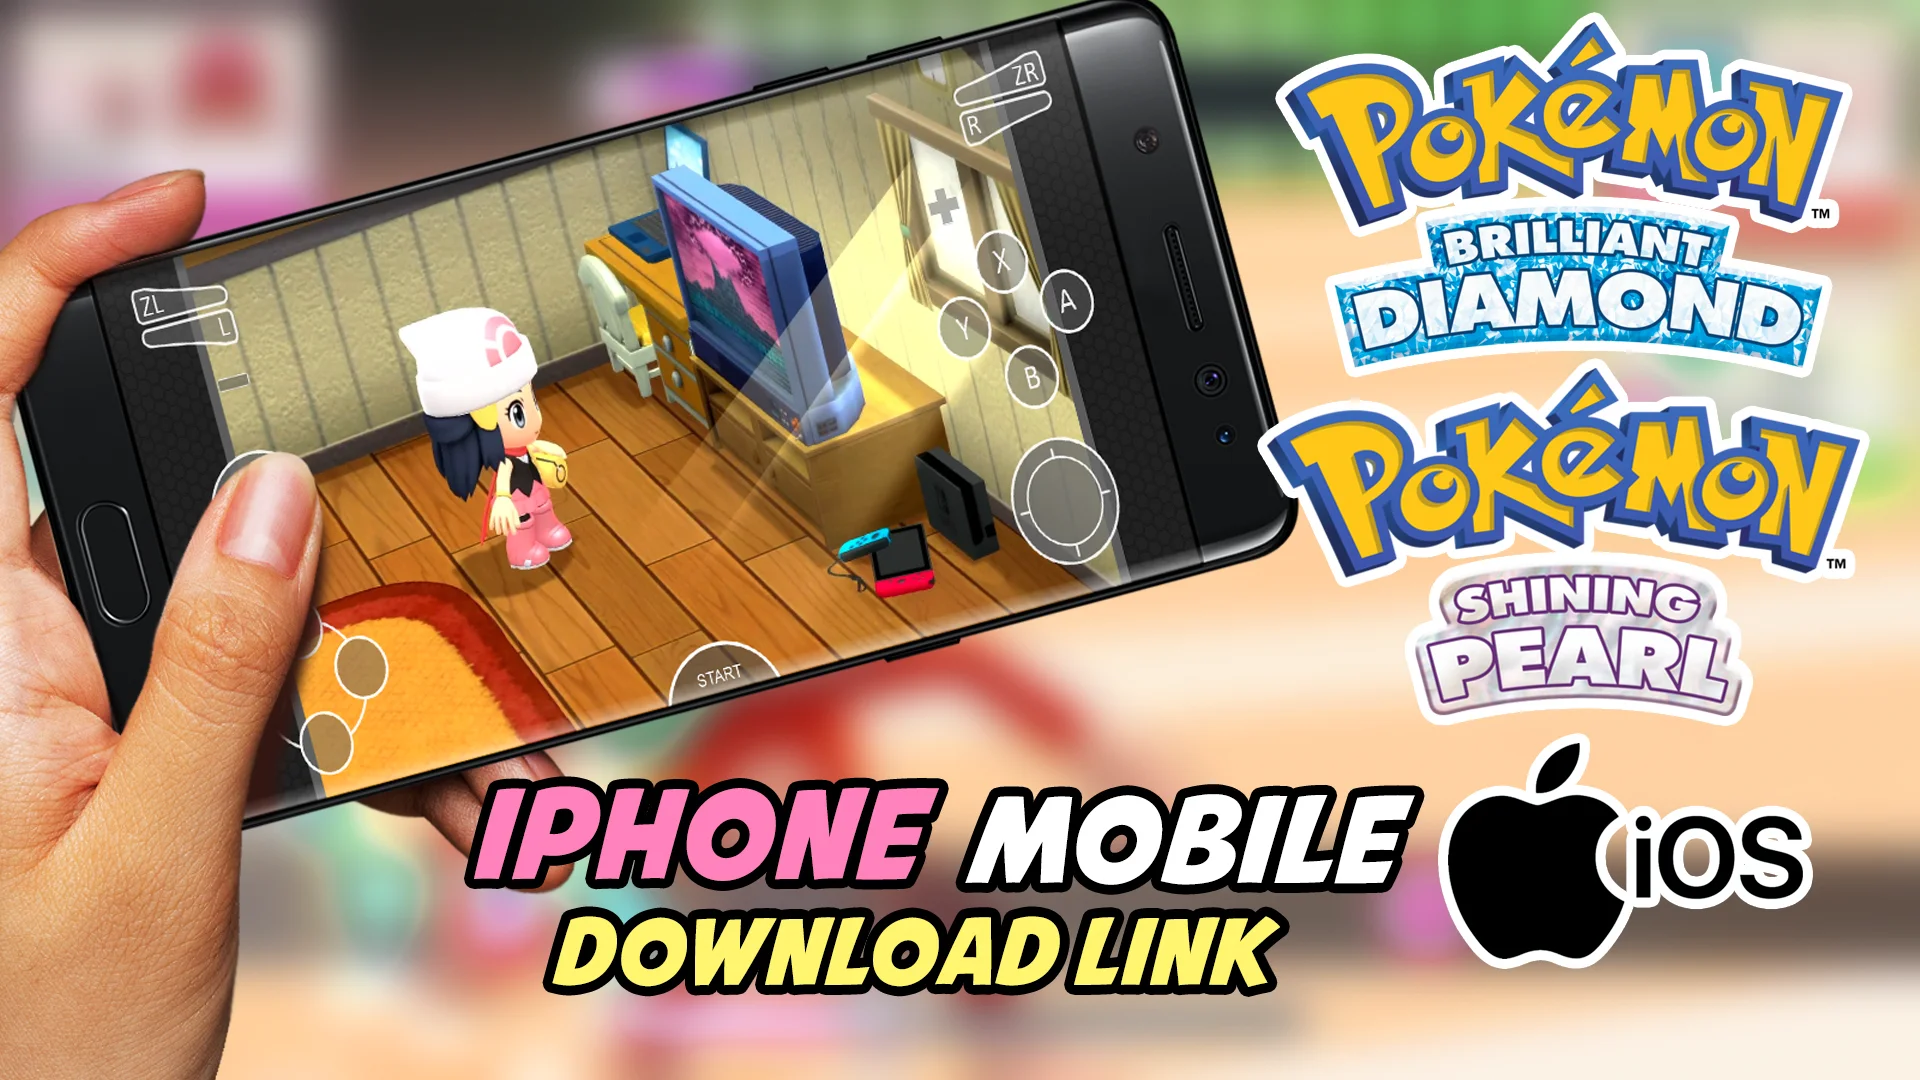 Download Pokemon Brilliant Diamond & Shining Pearl iPhone Version on Vimeo